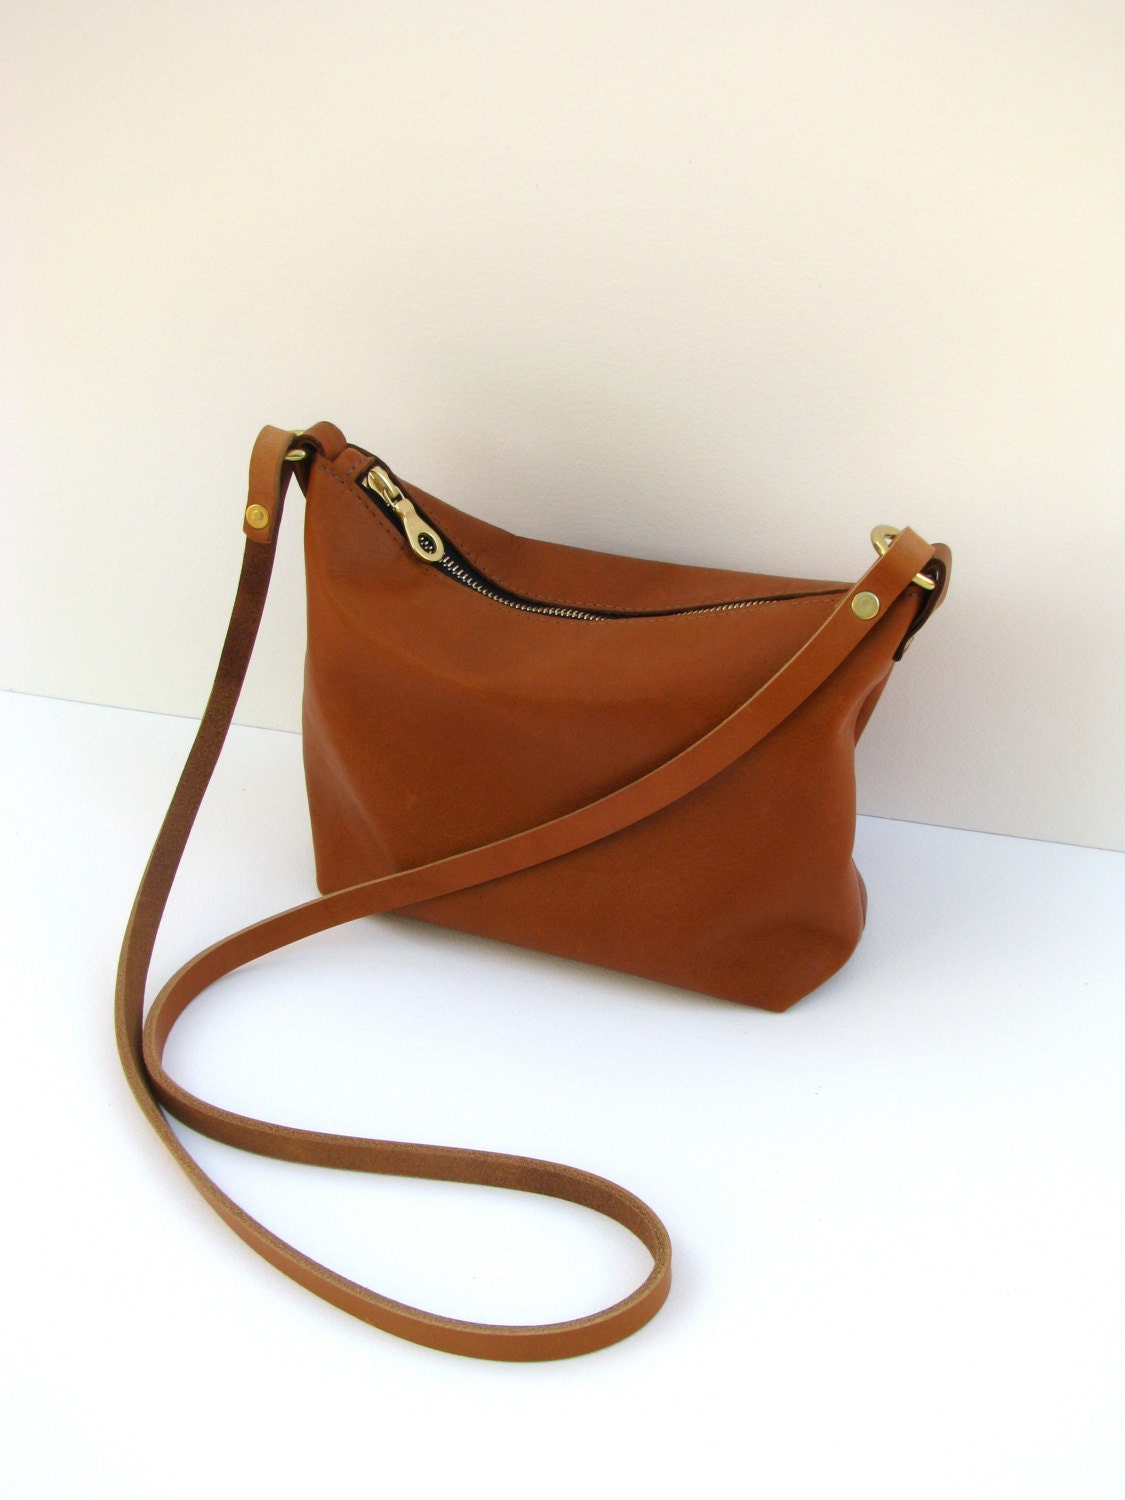 MINI Cross Body Purse    small leather messenger bag in cognac